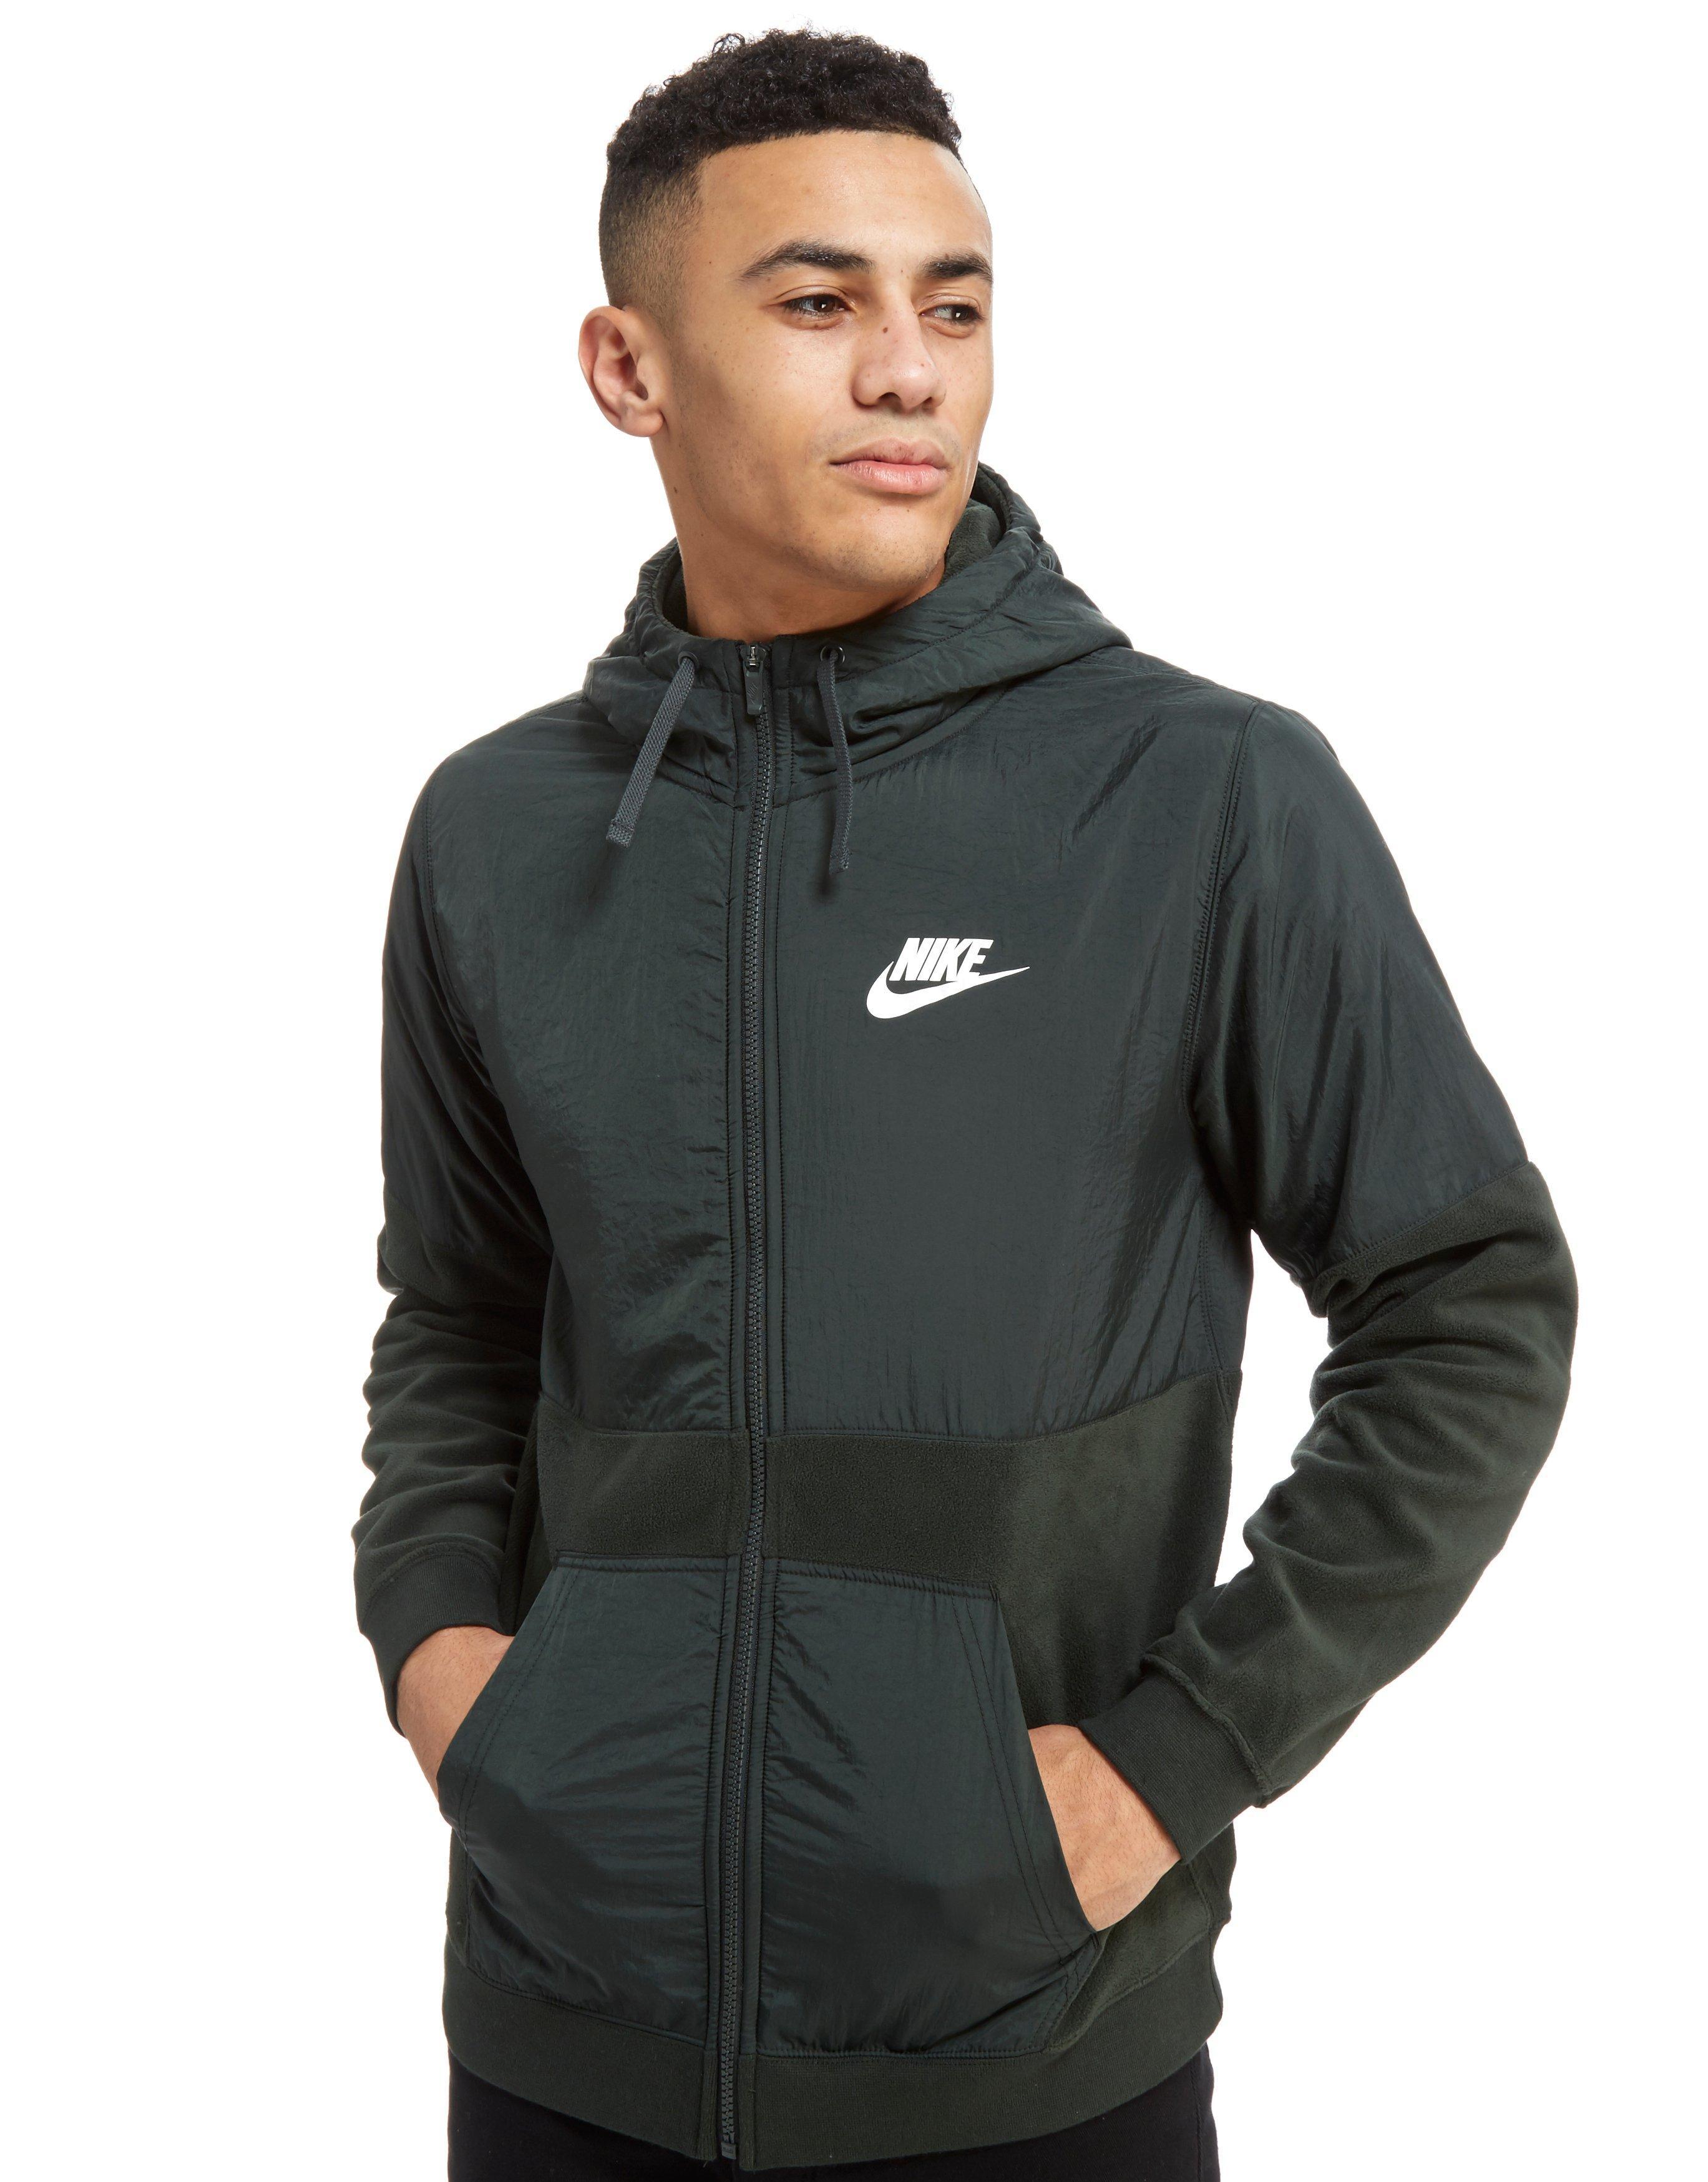 Nike Cotton Club Full Zip Winter Hoodie in Green for Men - Lyst